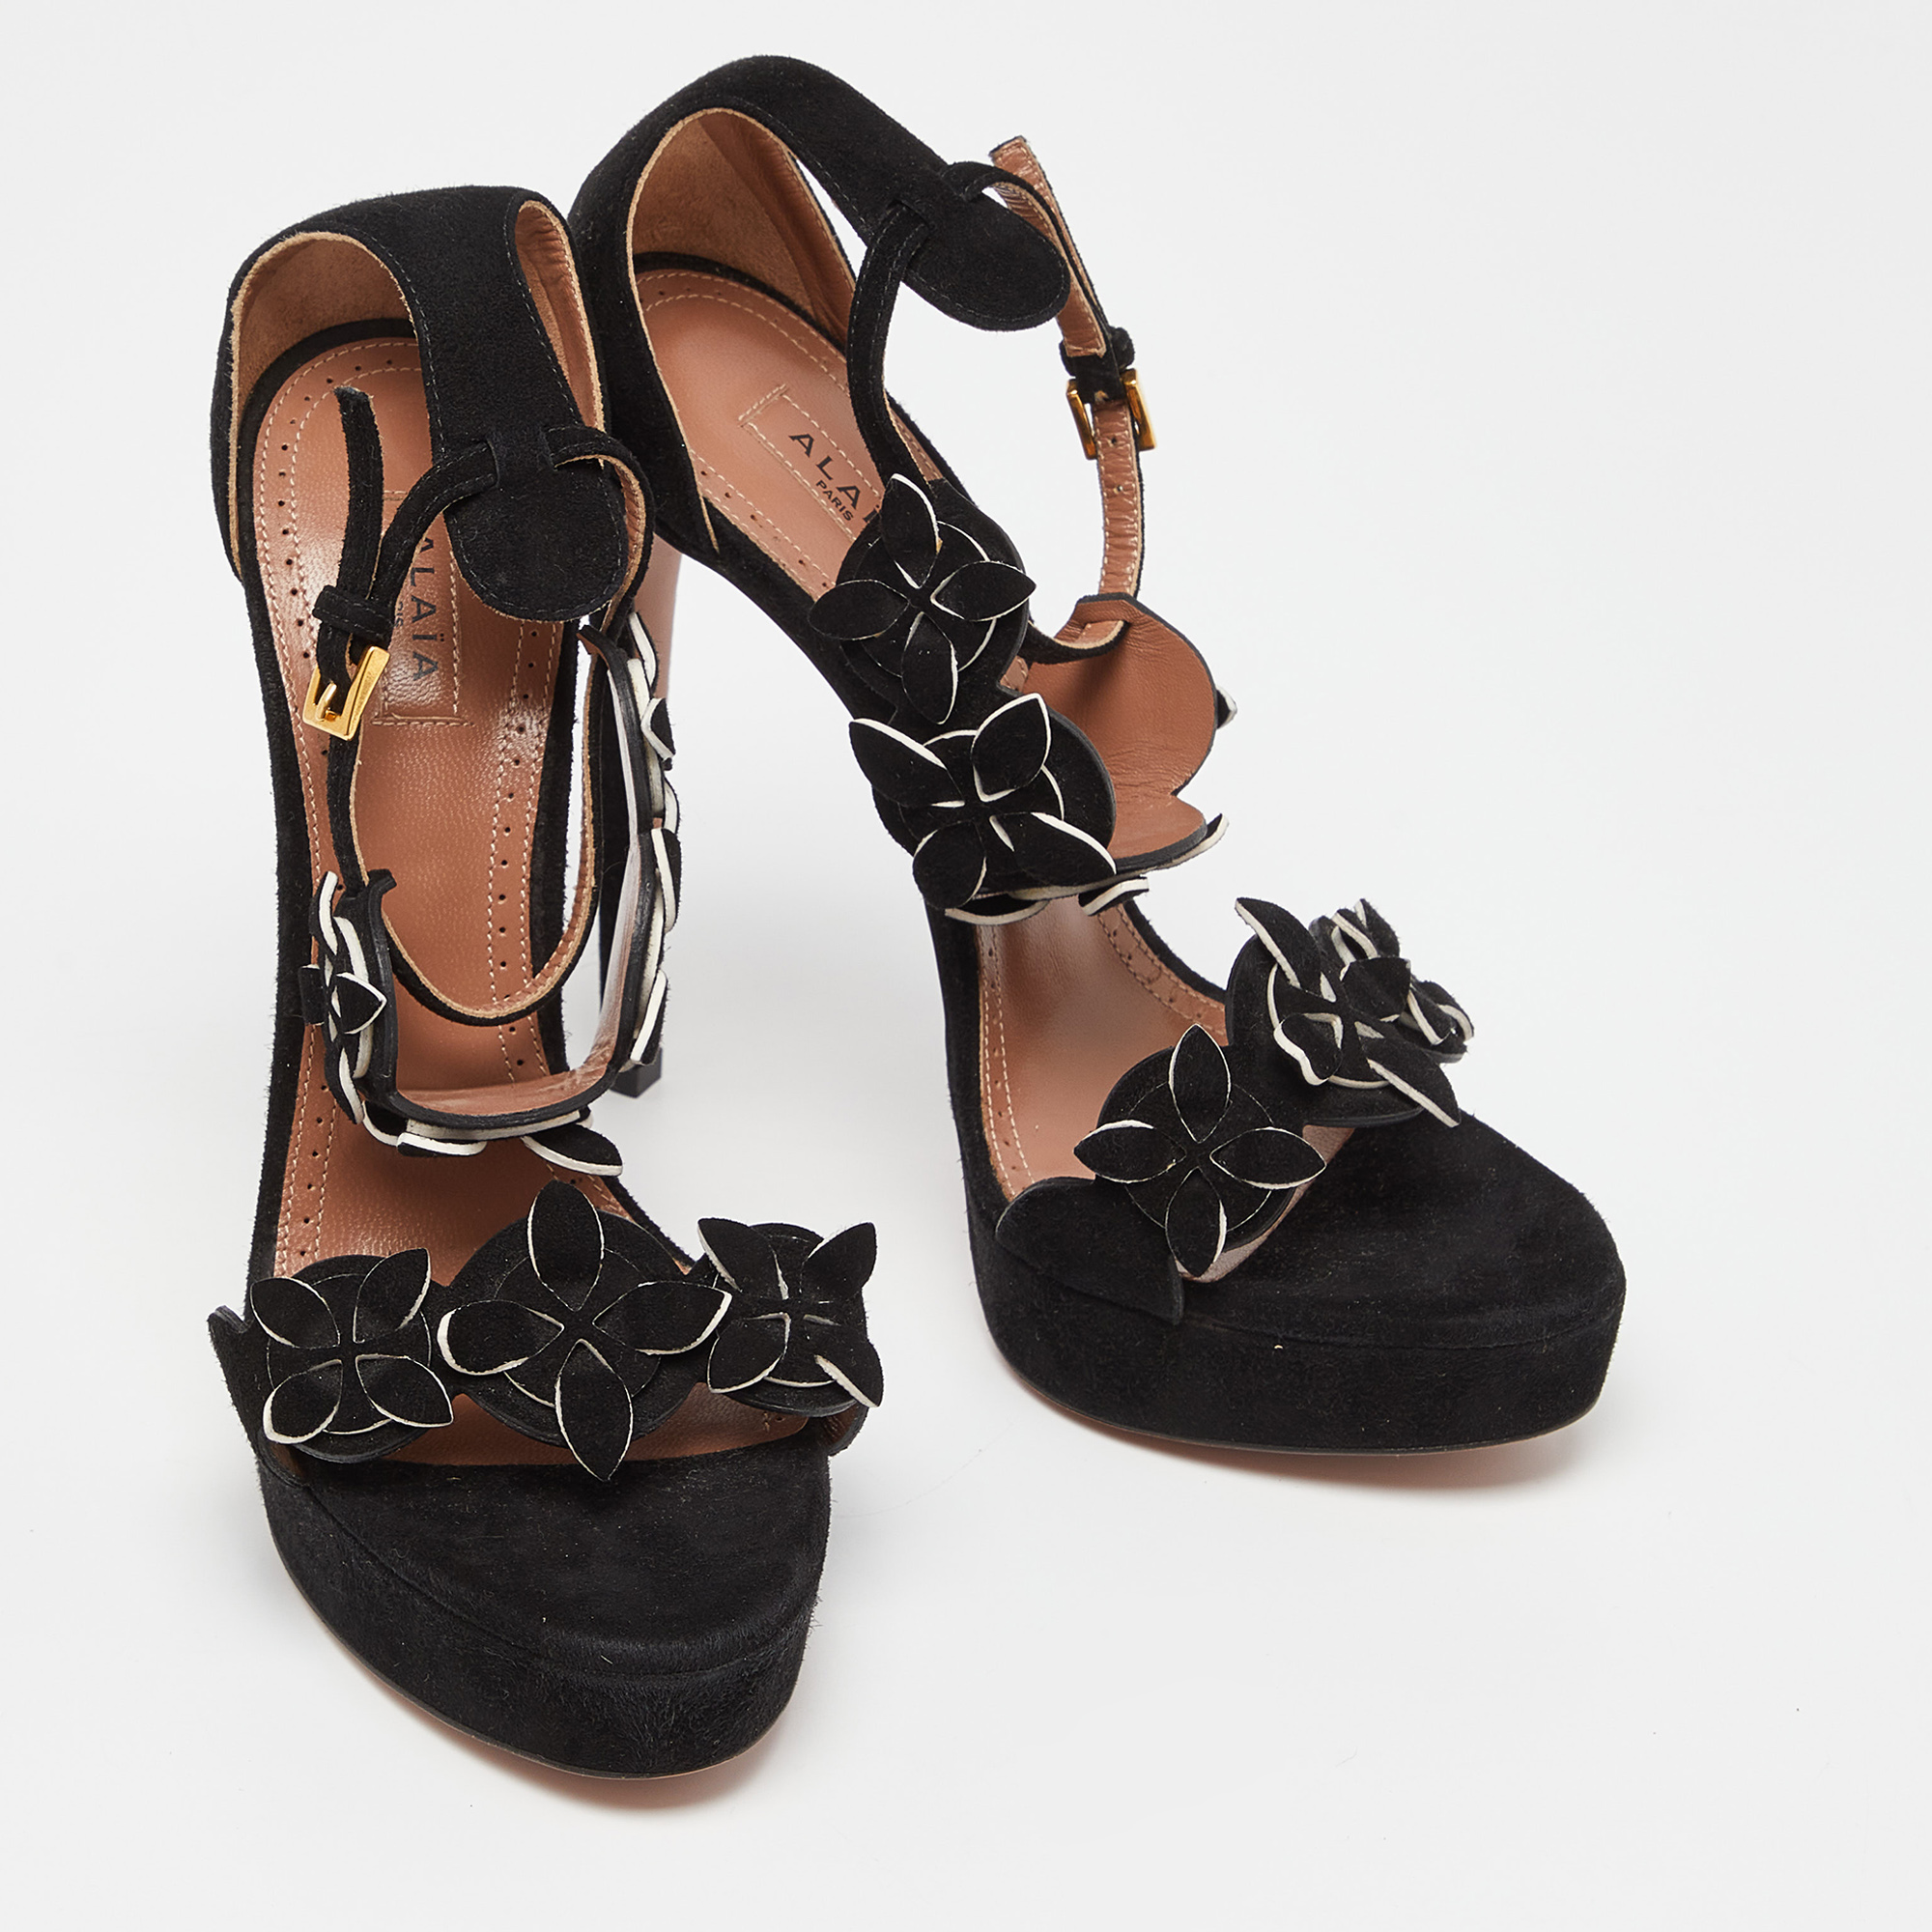 Alaia Black Suede Platform Ankle Strap Sandals Size 38